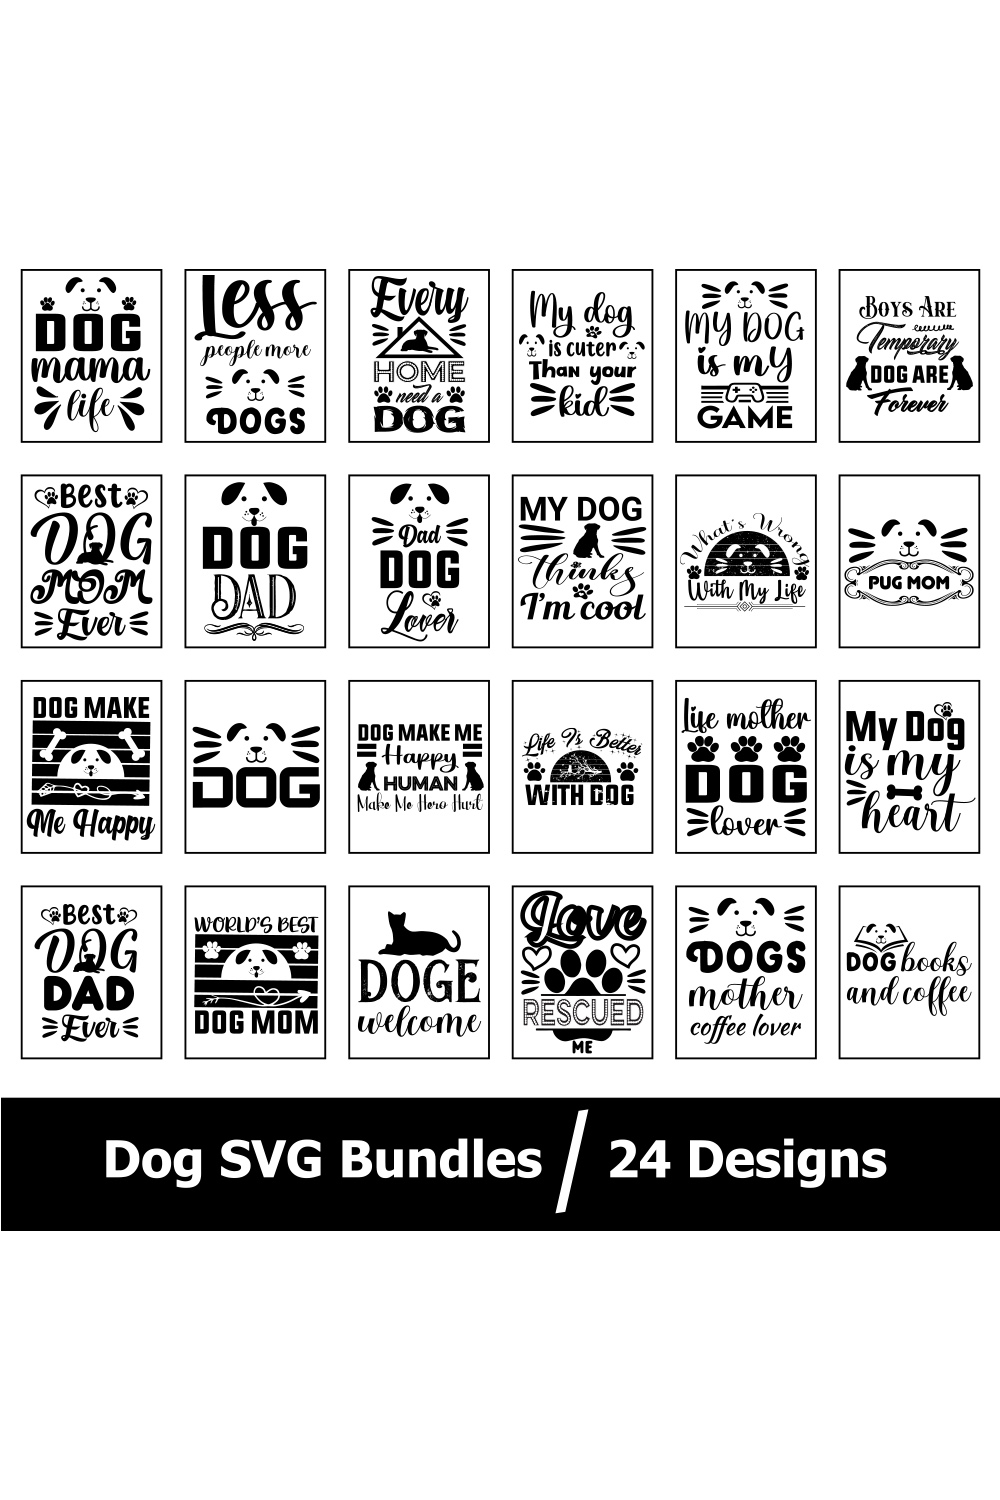 Dogs SVG Bundles pinterest preview image.